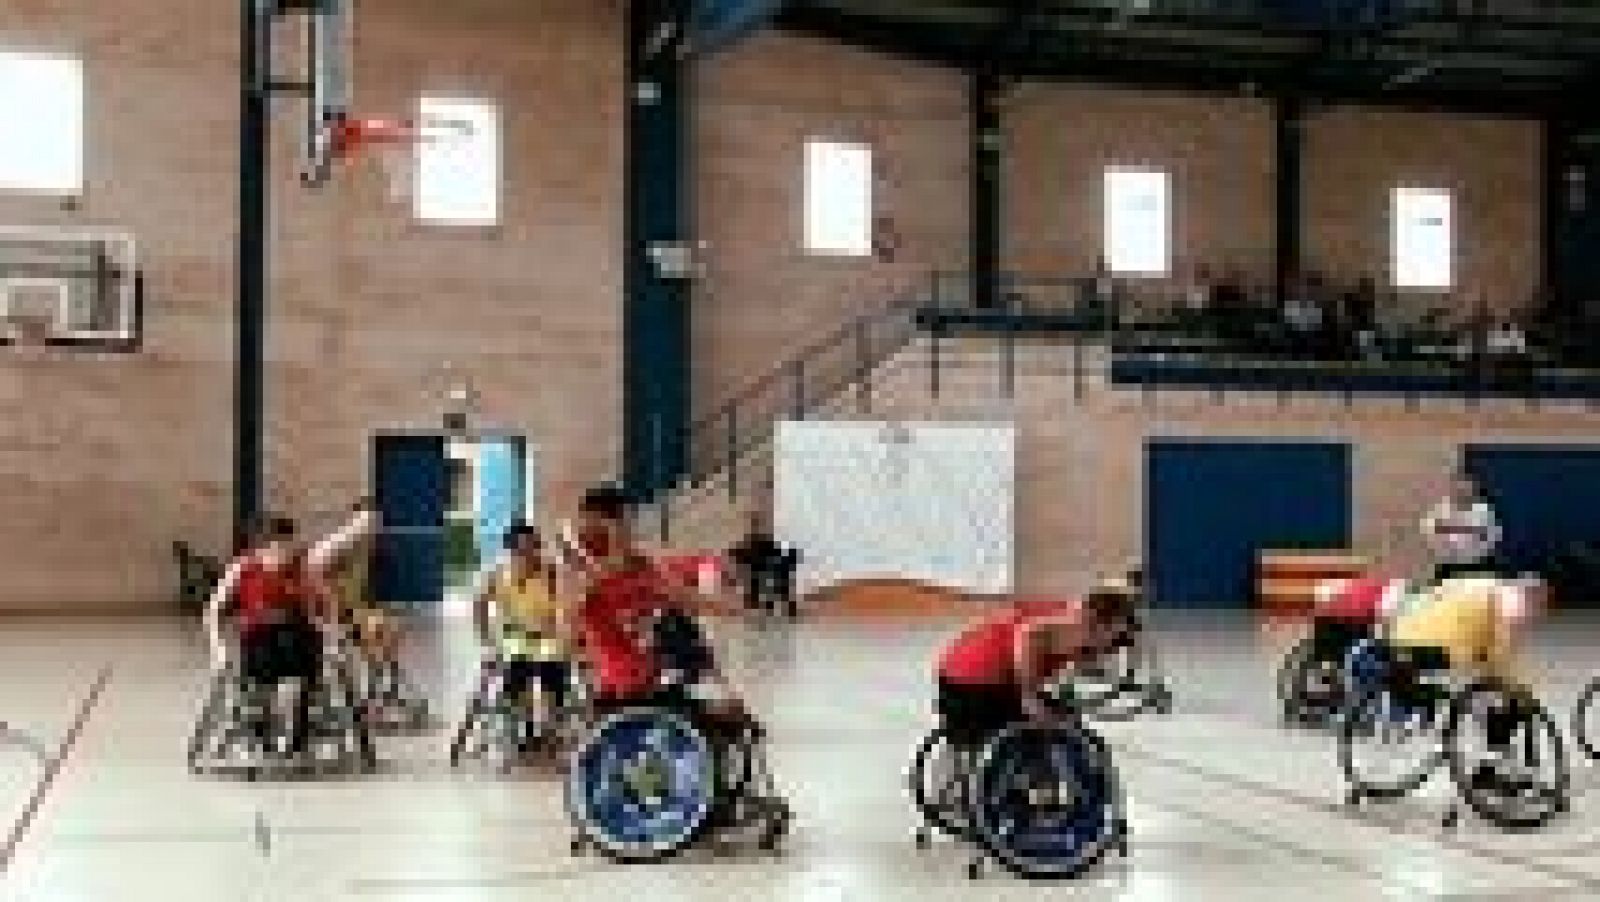 Baloncesto en silla de ruedas: Baloncesto en silla de ruedas - Presentación Liga Nacional División de Honor | RTVE Play